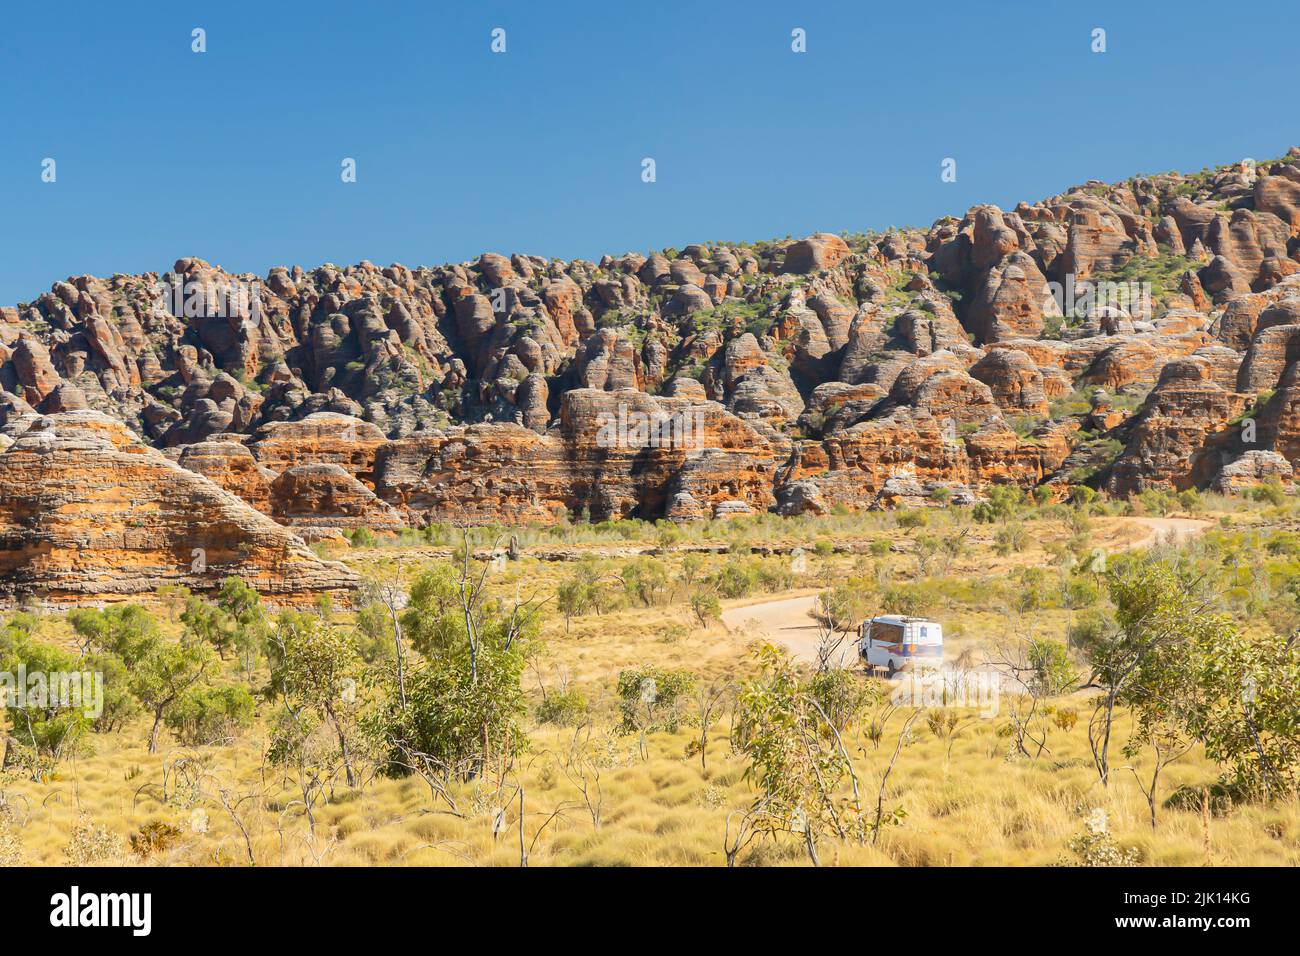 Bungle Bungles with a bus in Kimberley, Western Australia Stock Photo